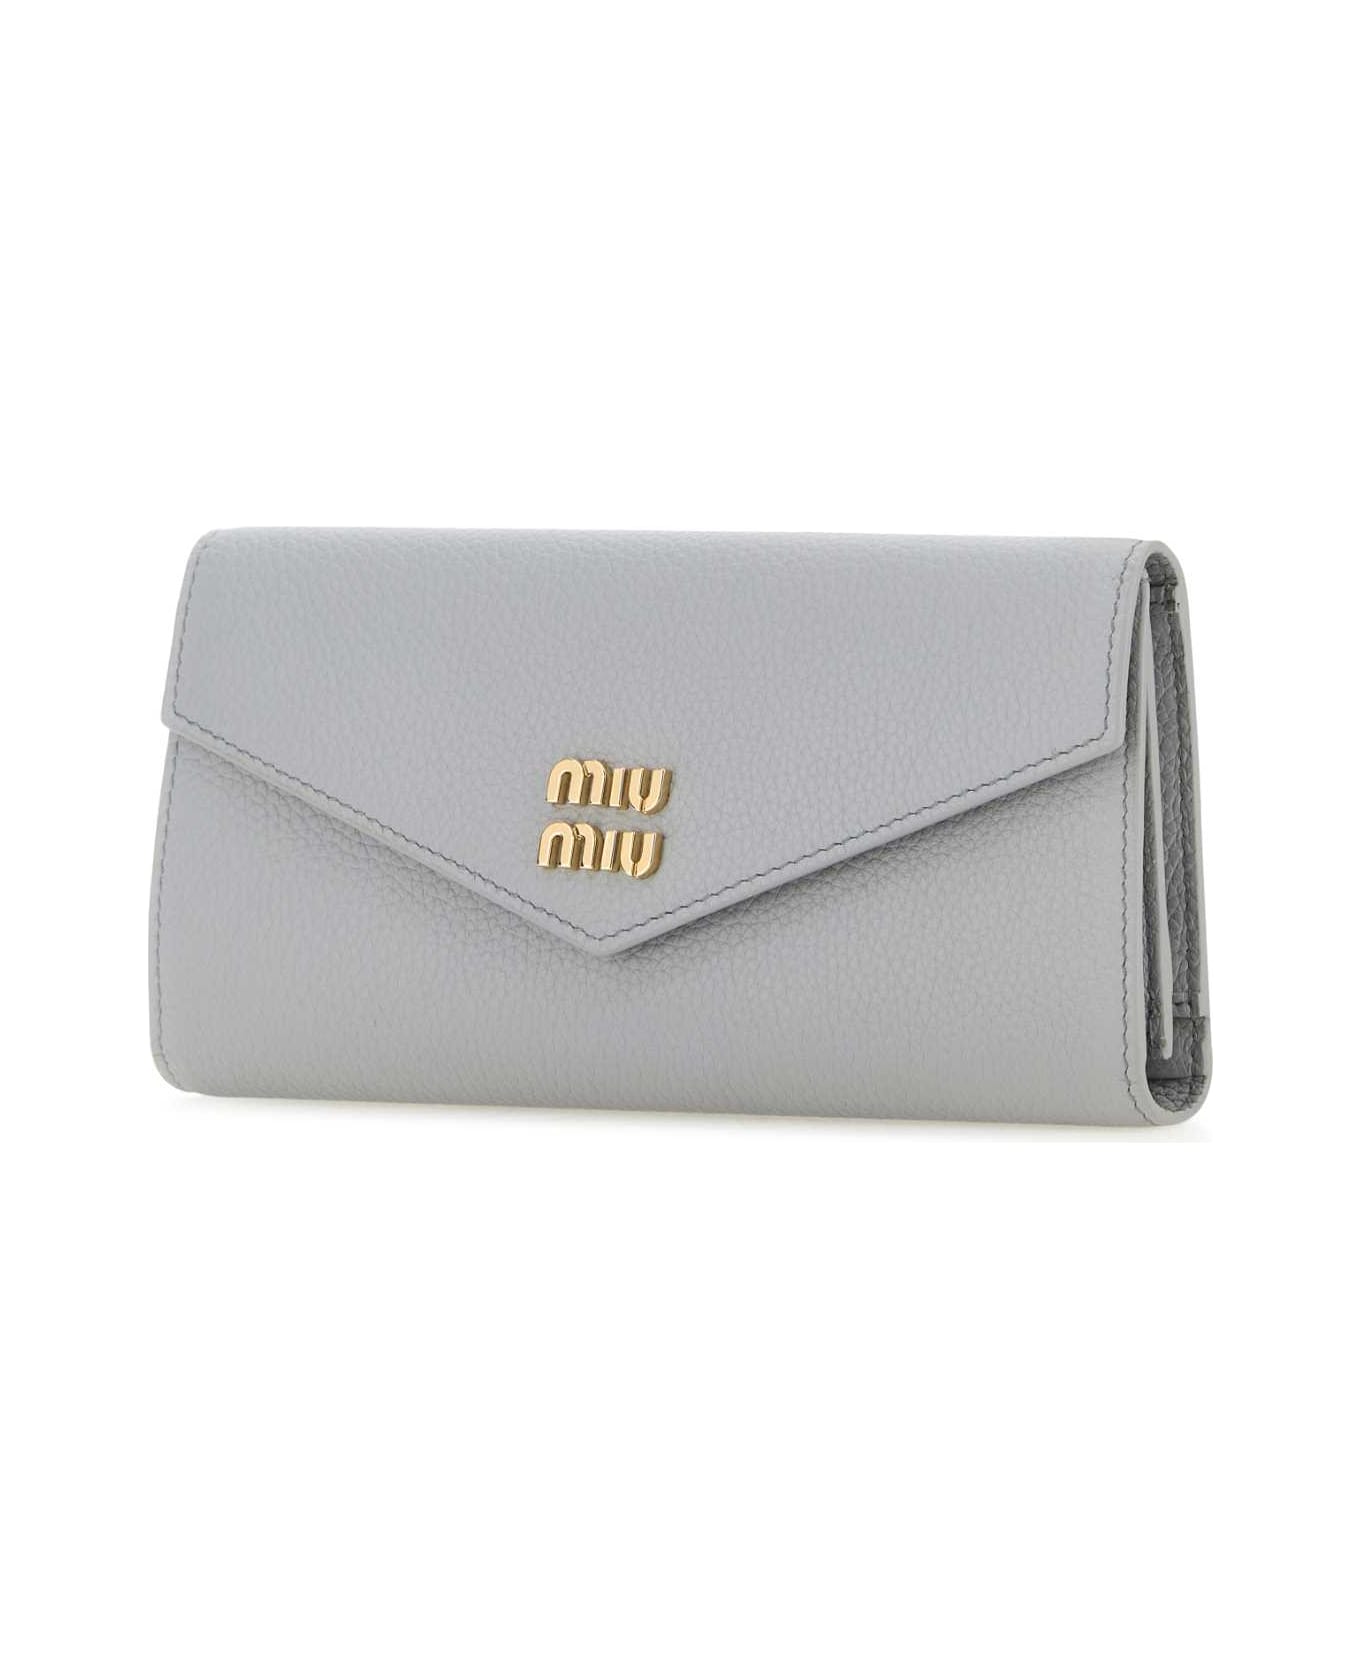 Miu Miu Powder Blue Leather Wallet - FIORDALISO 財布